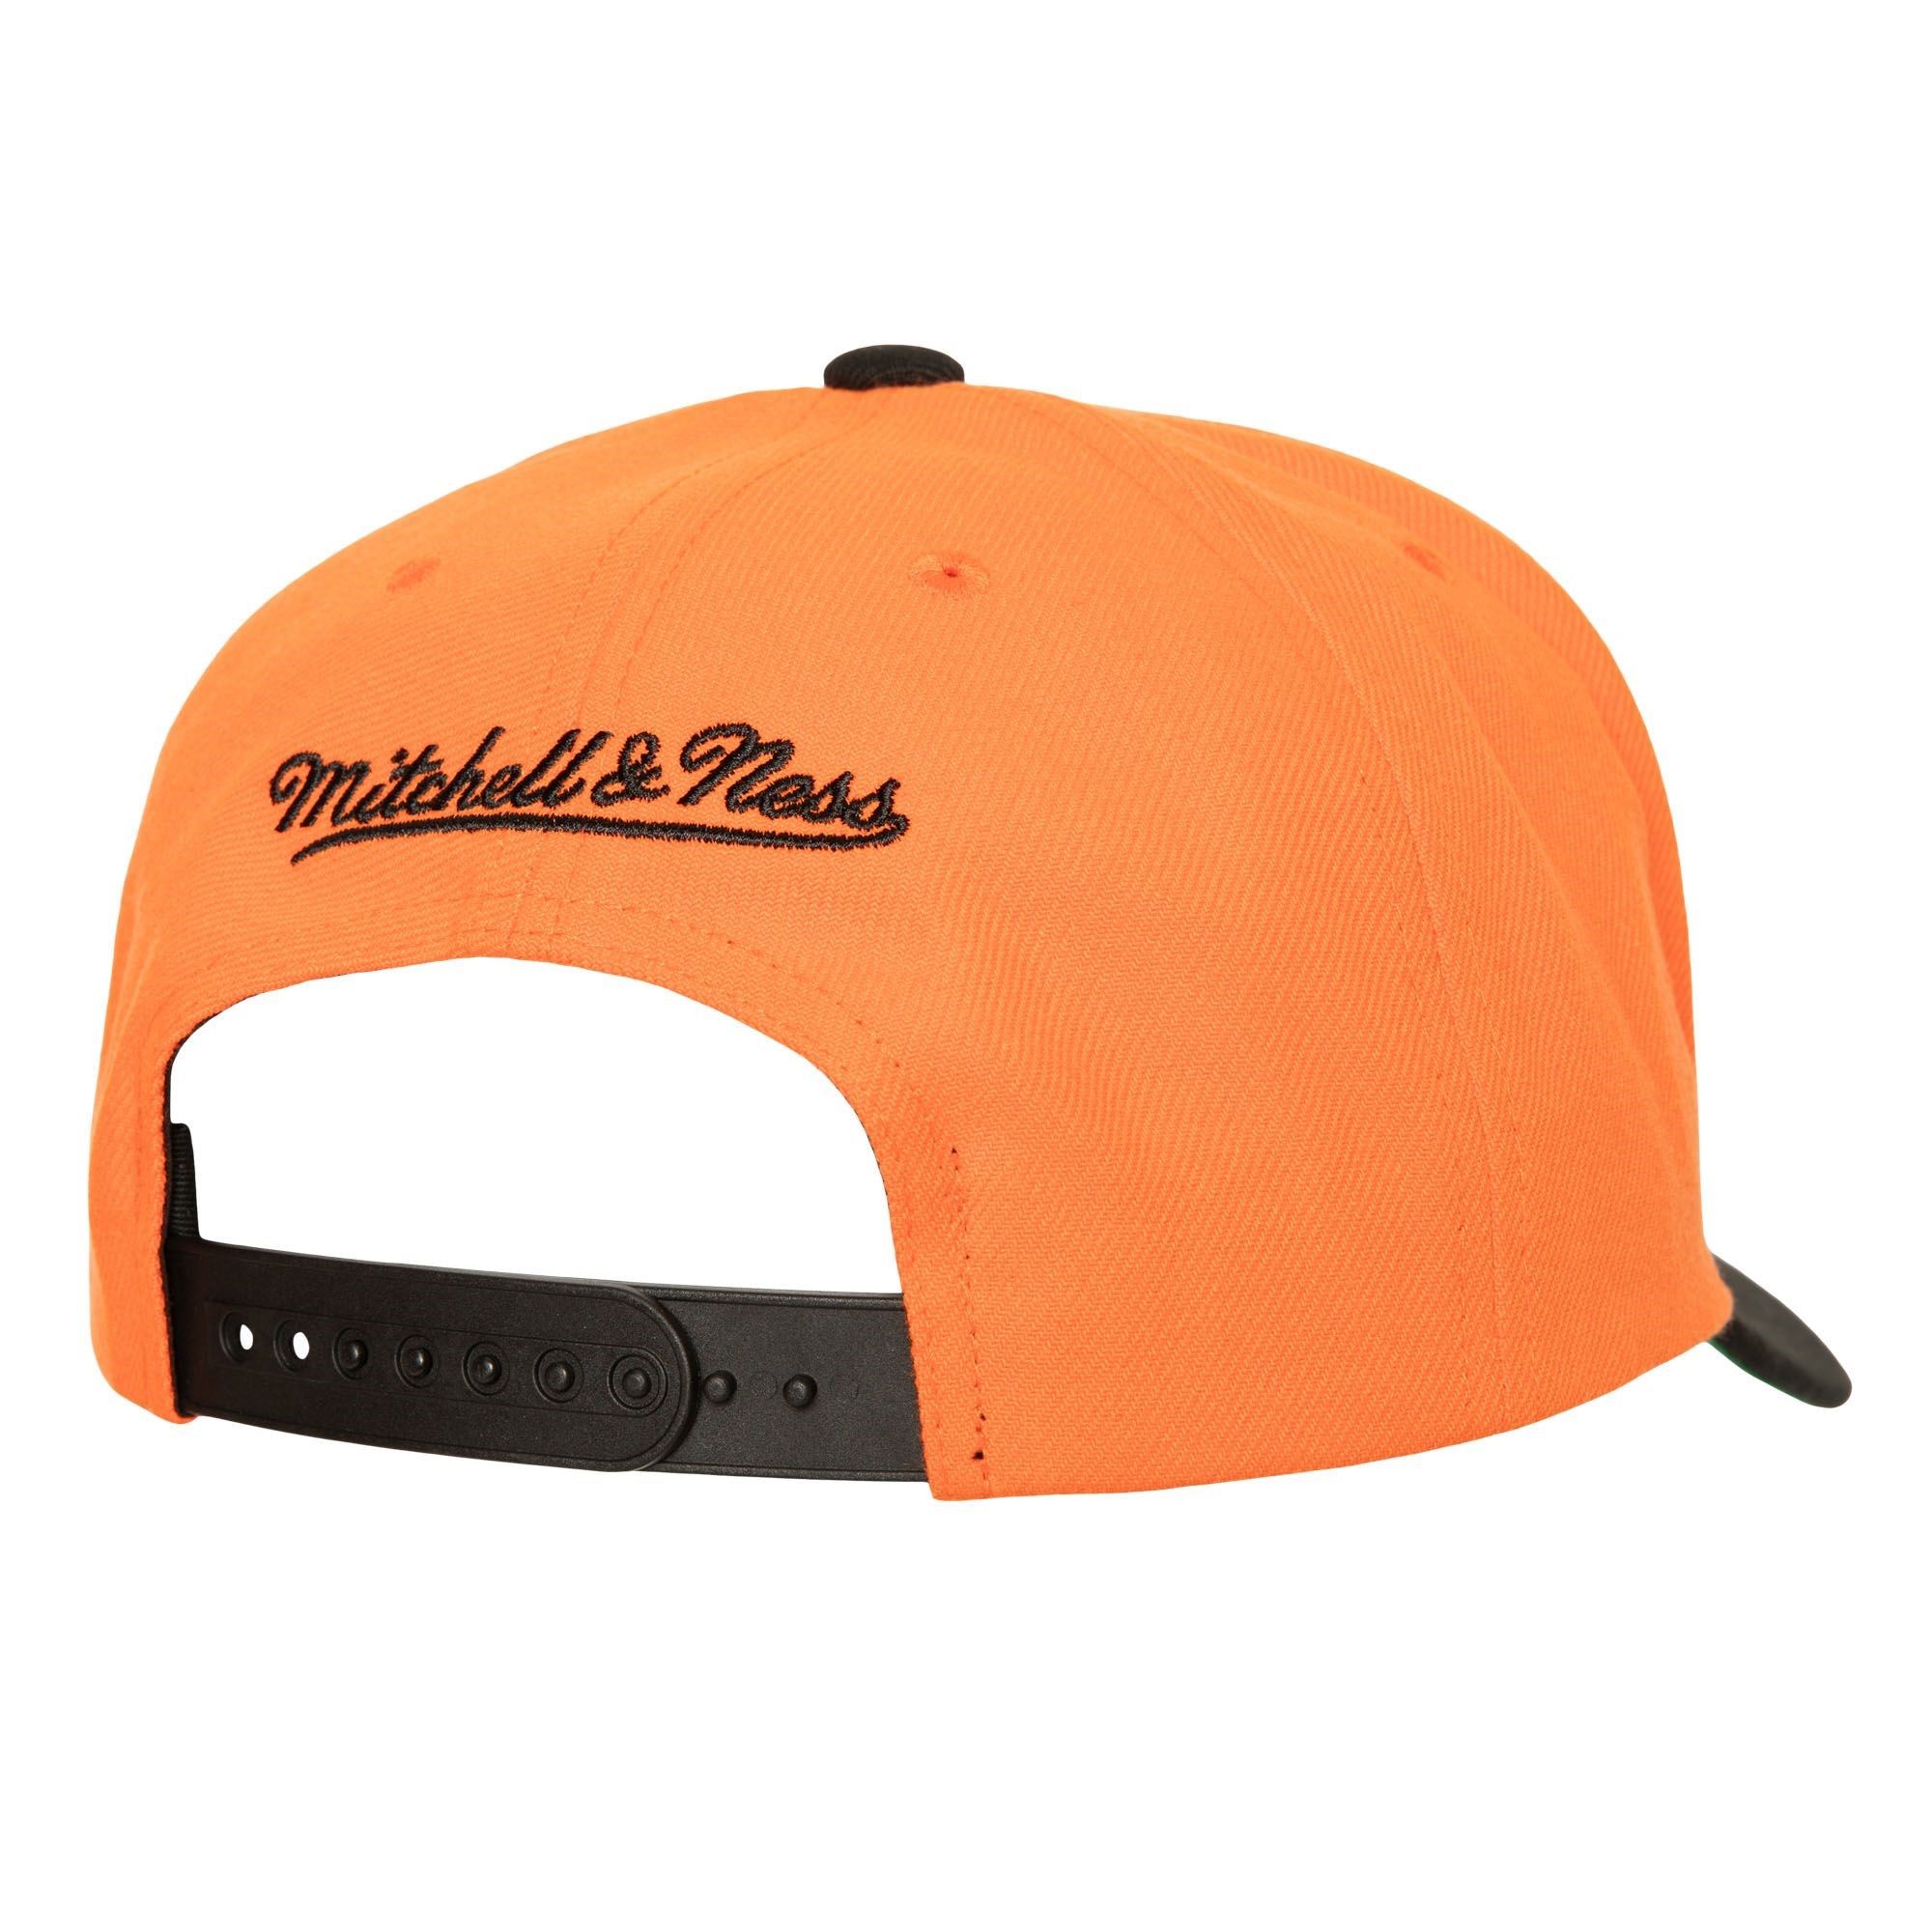 Anaheim Ducks NHL Boom Text  Pro Vintage Snapback Cap Orange Mitchell & Ness